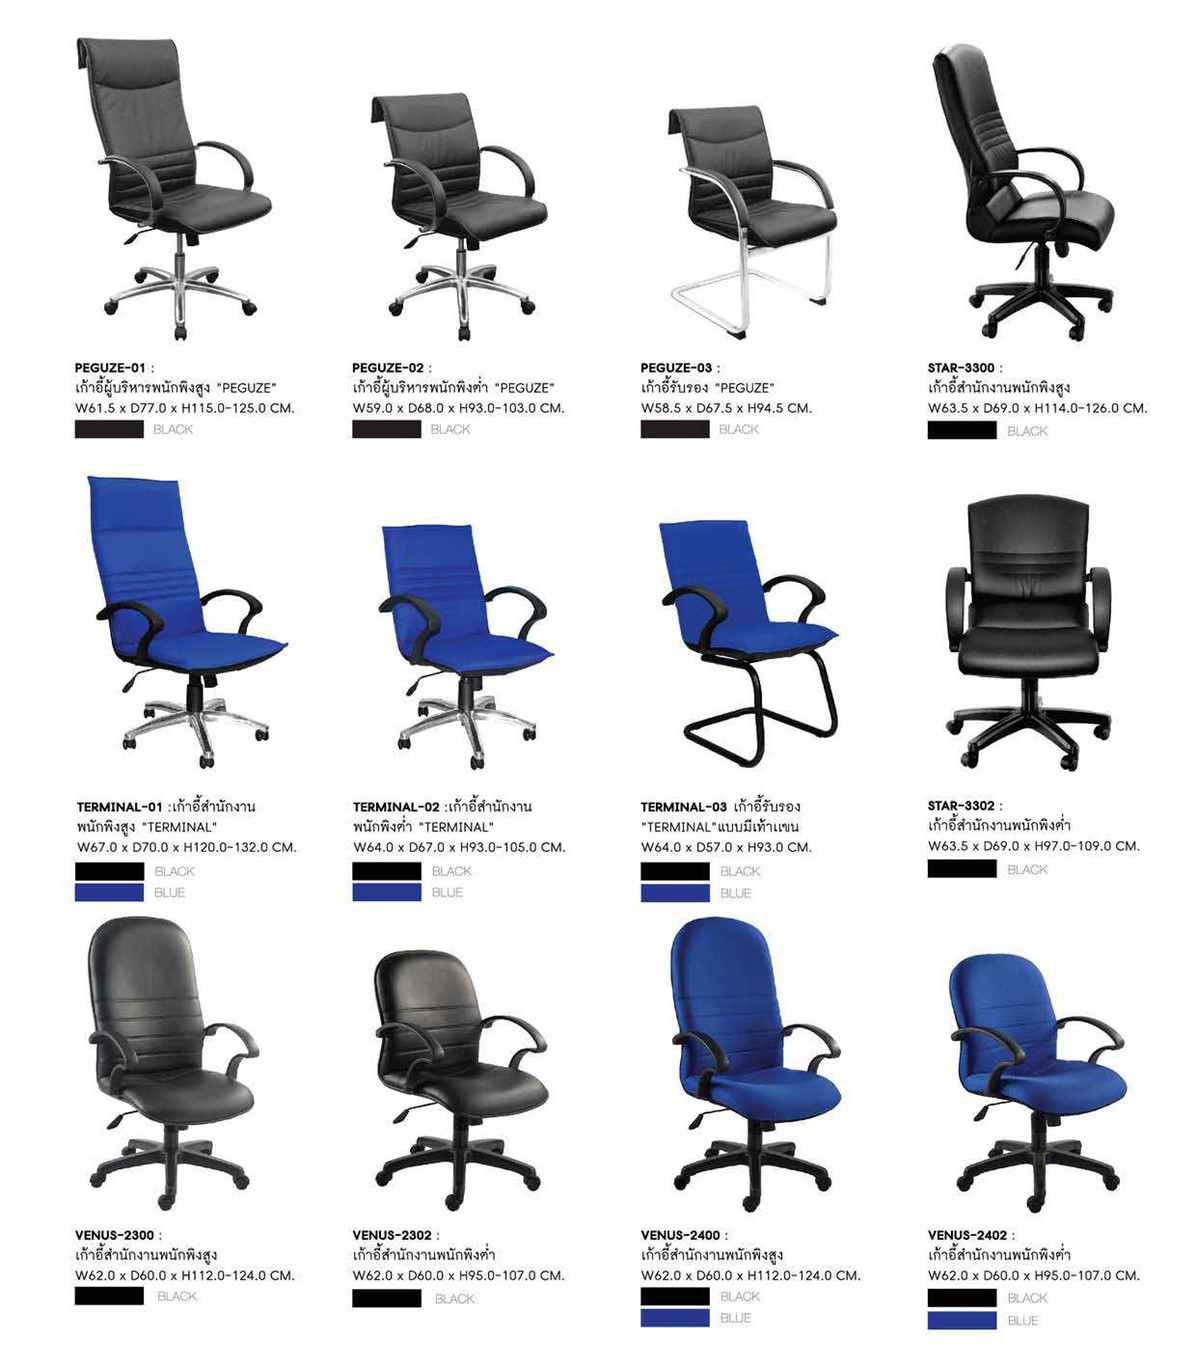 52055::VENUS-2400::เก้าอี้สำนักงาน VENUS ก620xล640xส1120-1220มม. บุผ้า สีน้ำเงิน,ดำ พนักพิงสูง เก้าอี้สำนักงาน SURE